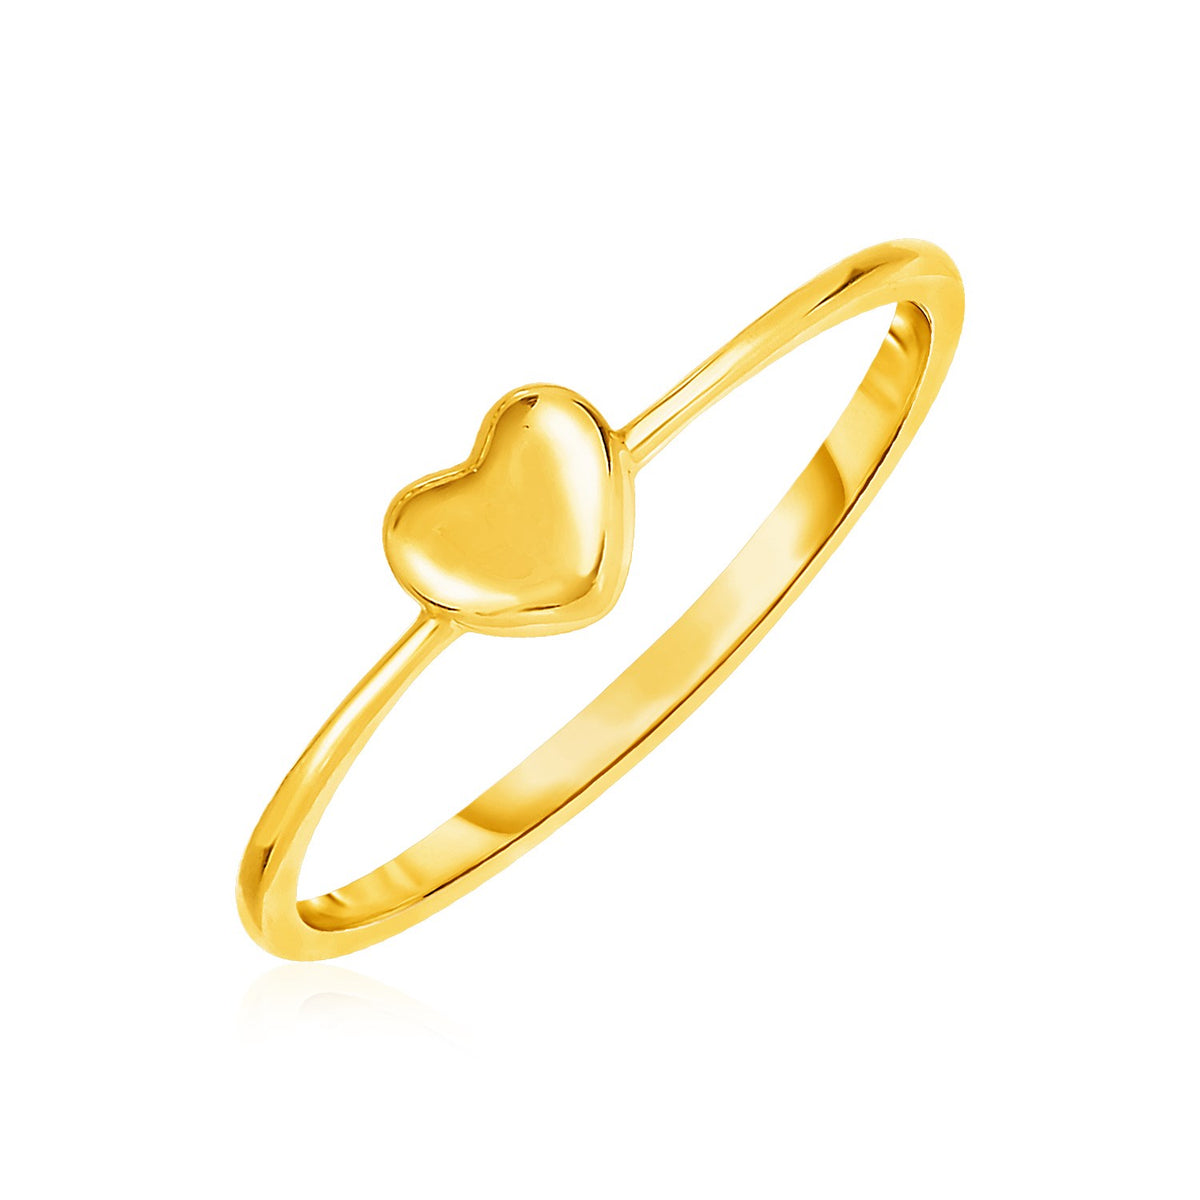 Puffed Heart Ring - 14k Yellow Gold